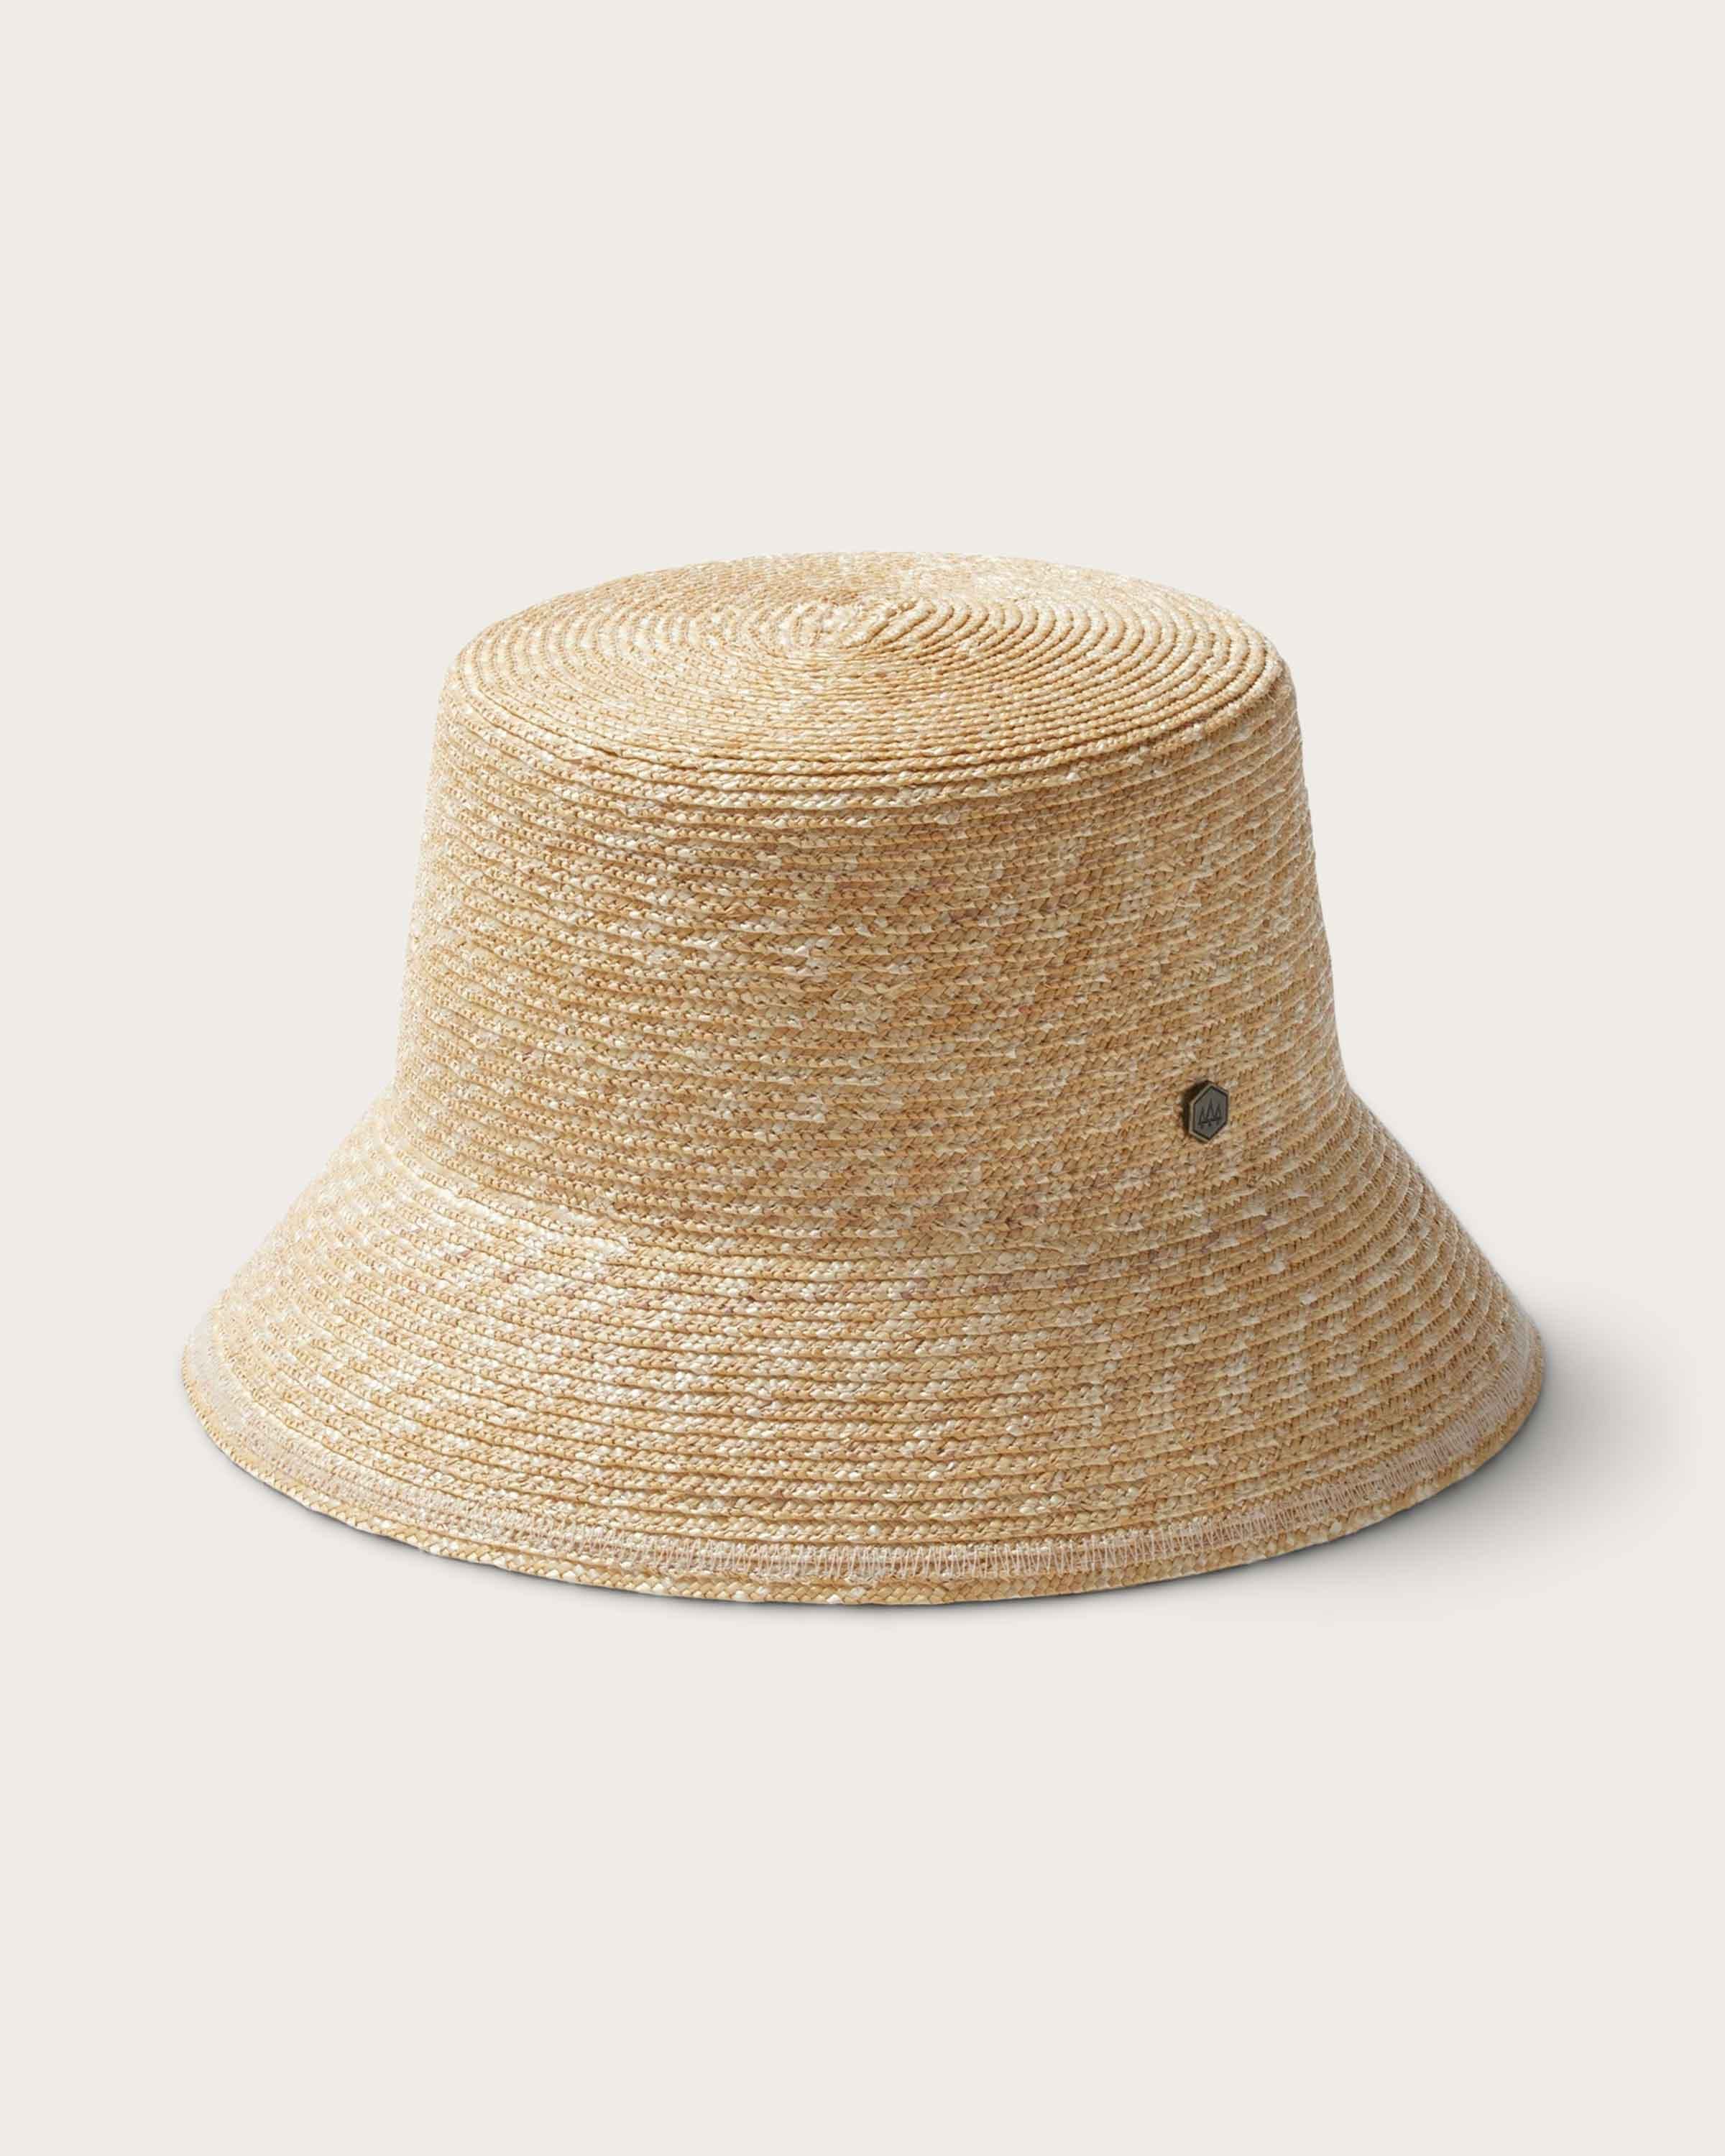 Audrey Bucket in Blonde - undefined - Hemlock Hat Co. Straw Bucket Hats